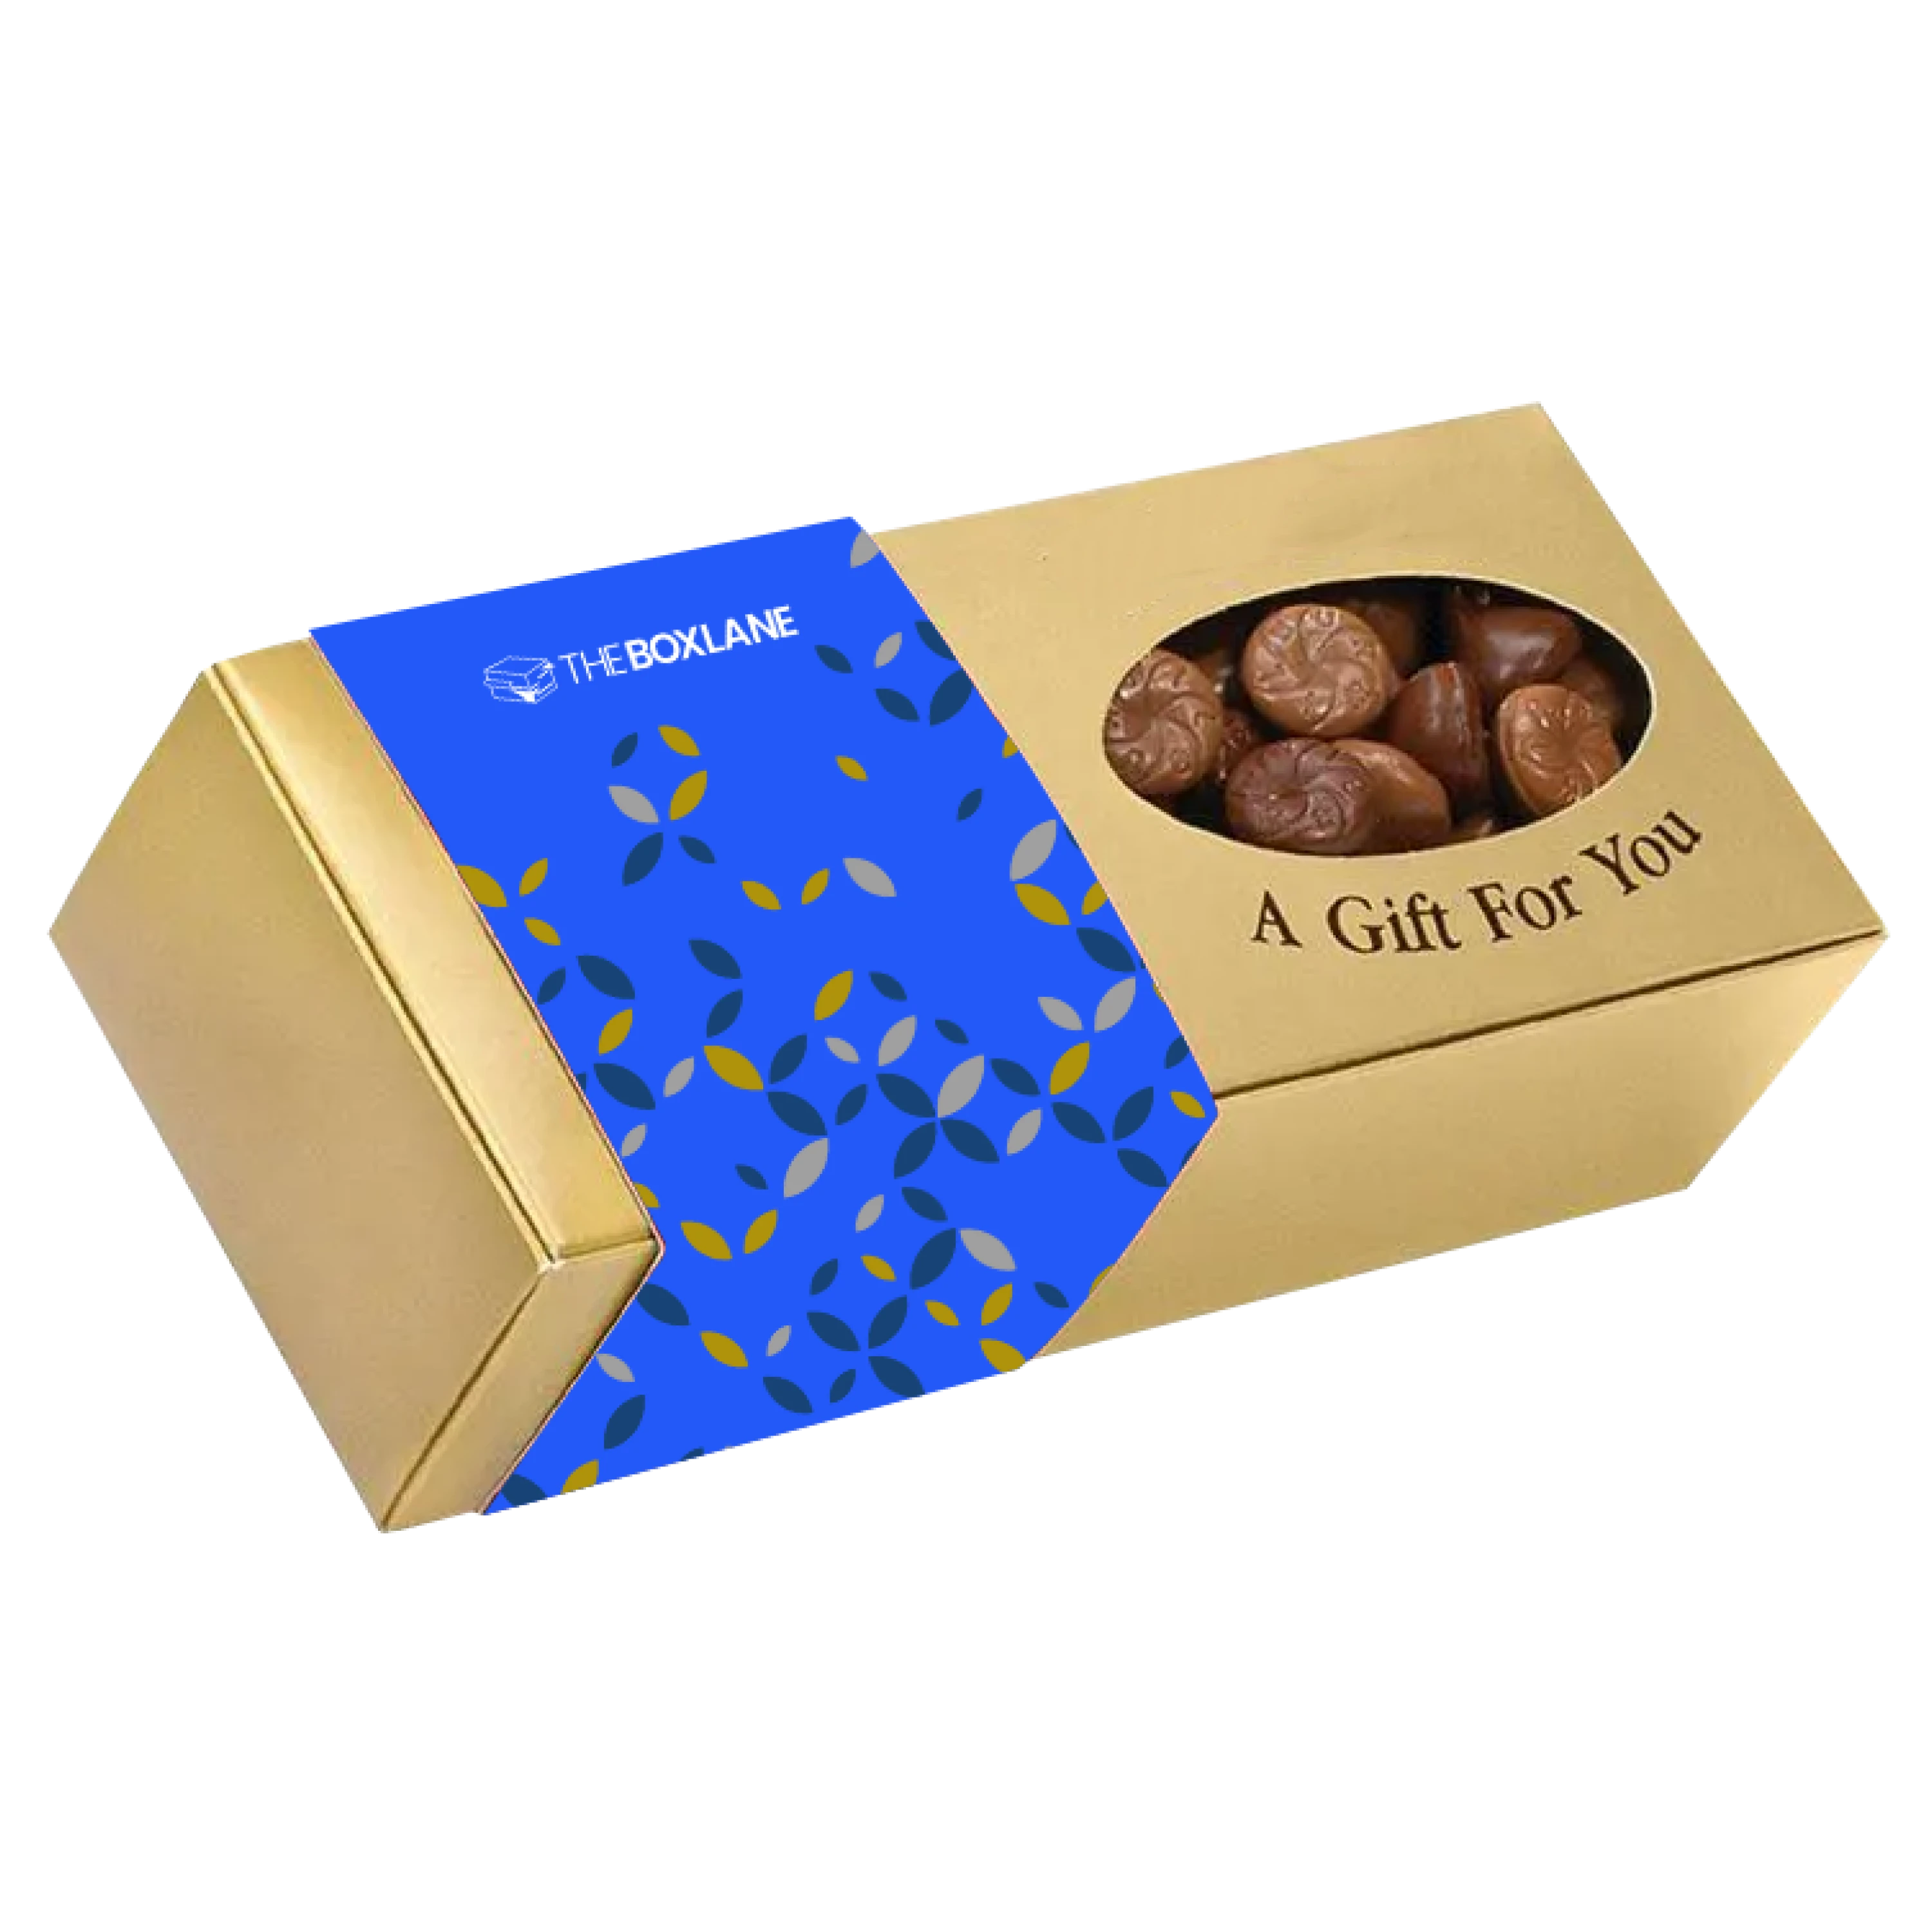 Carousel Truffle Box Packaging image 1 | The Box Lane